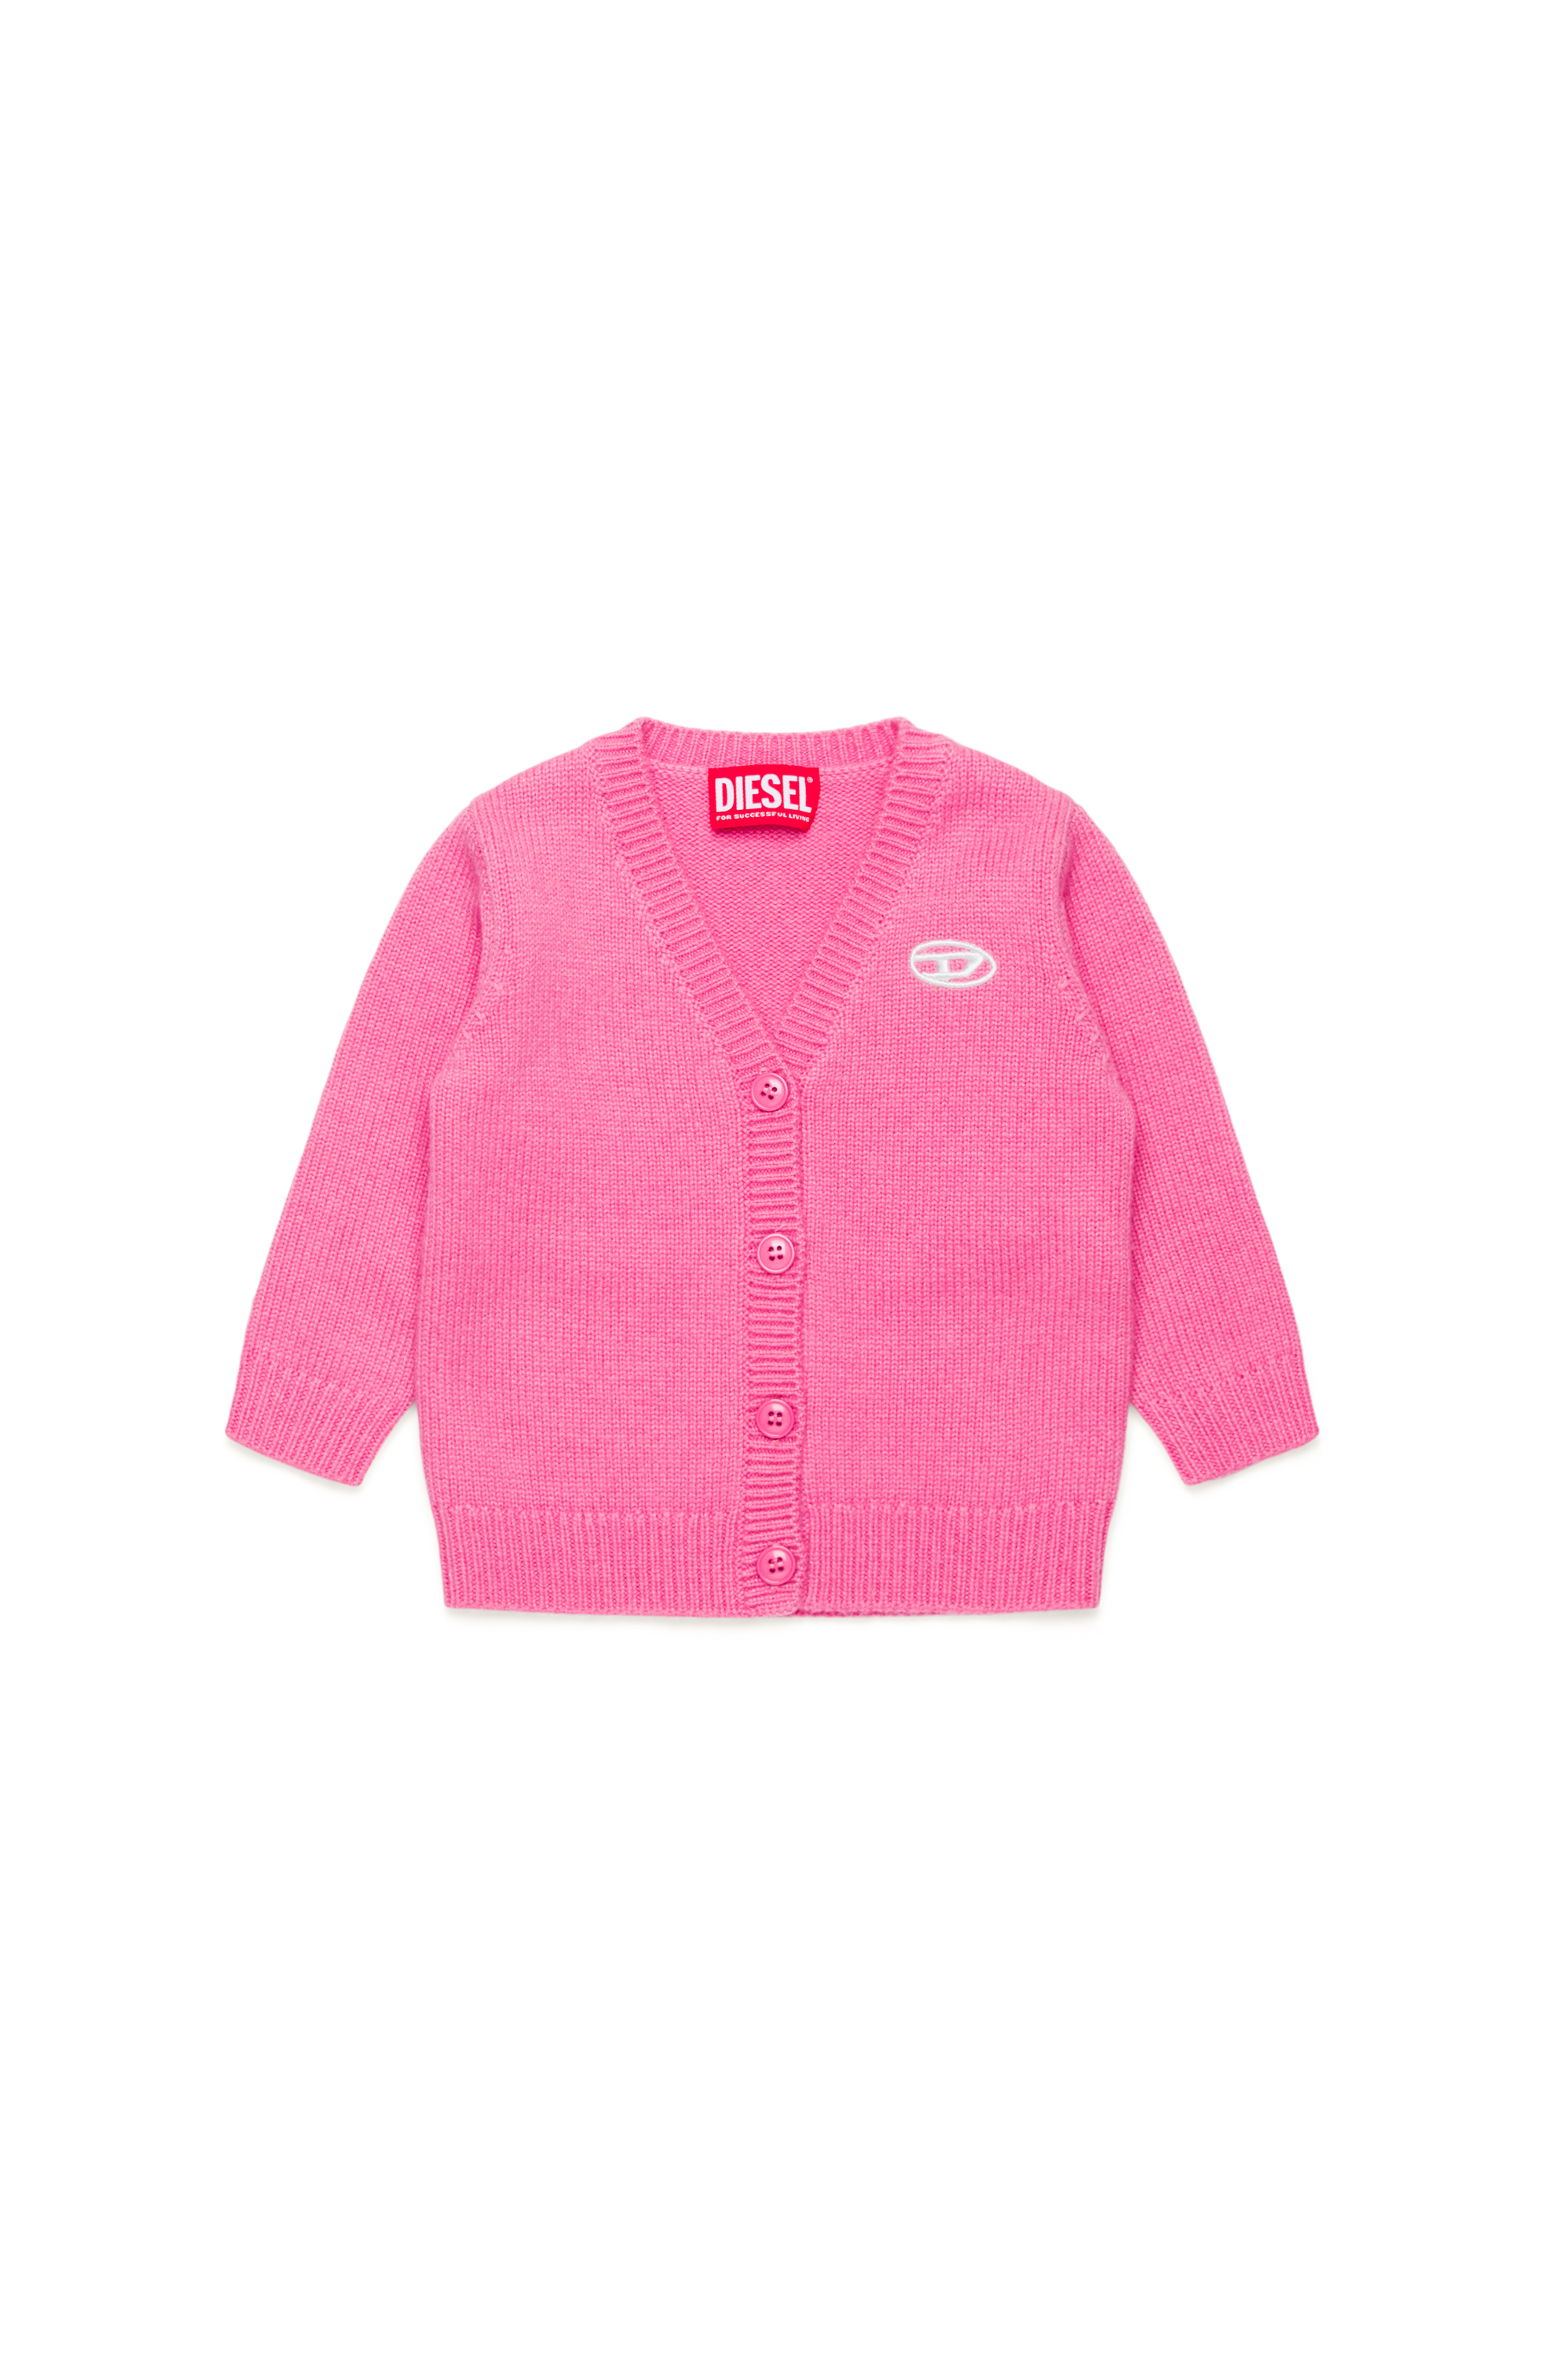 Diesel - KMARCOB, Unisex Cardigan in cashmere-enriched blend in Pink - Image 1